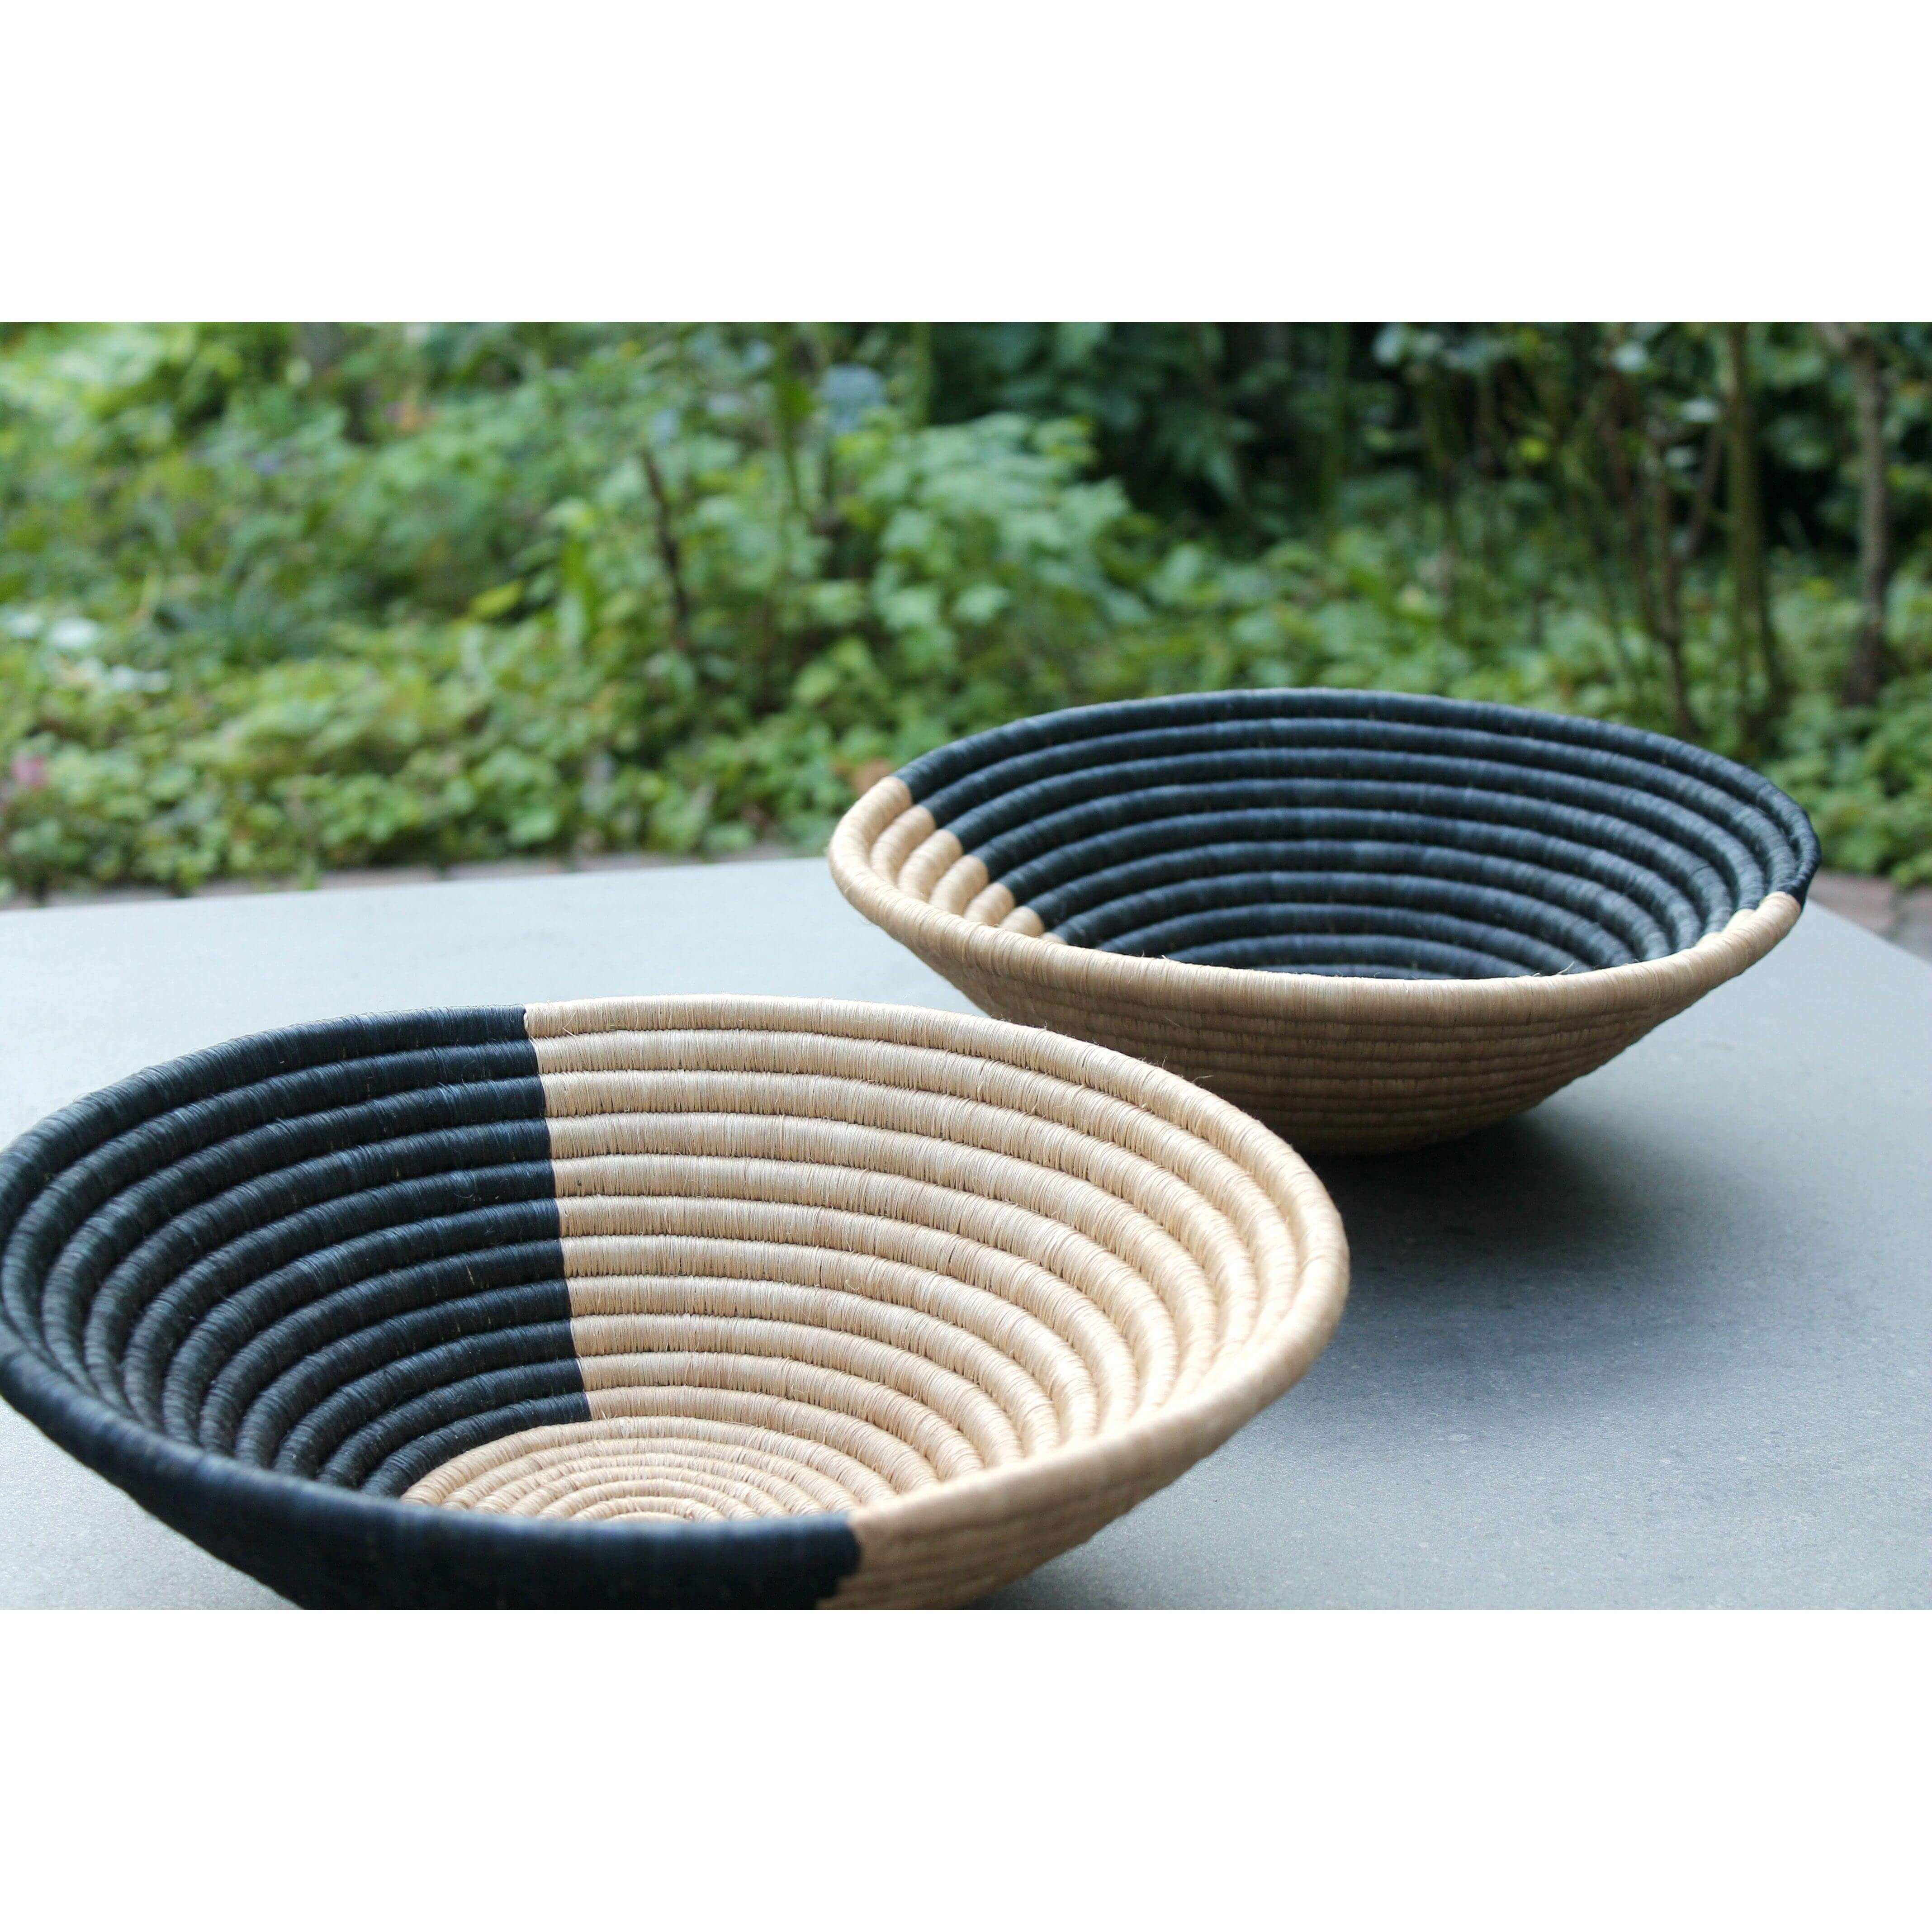 African woven bowls handmade by artisans